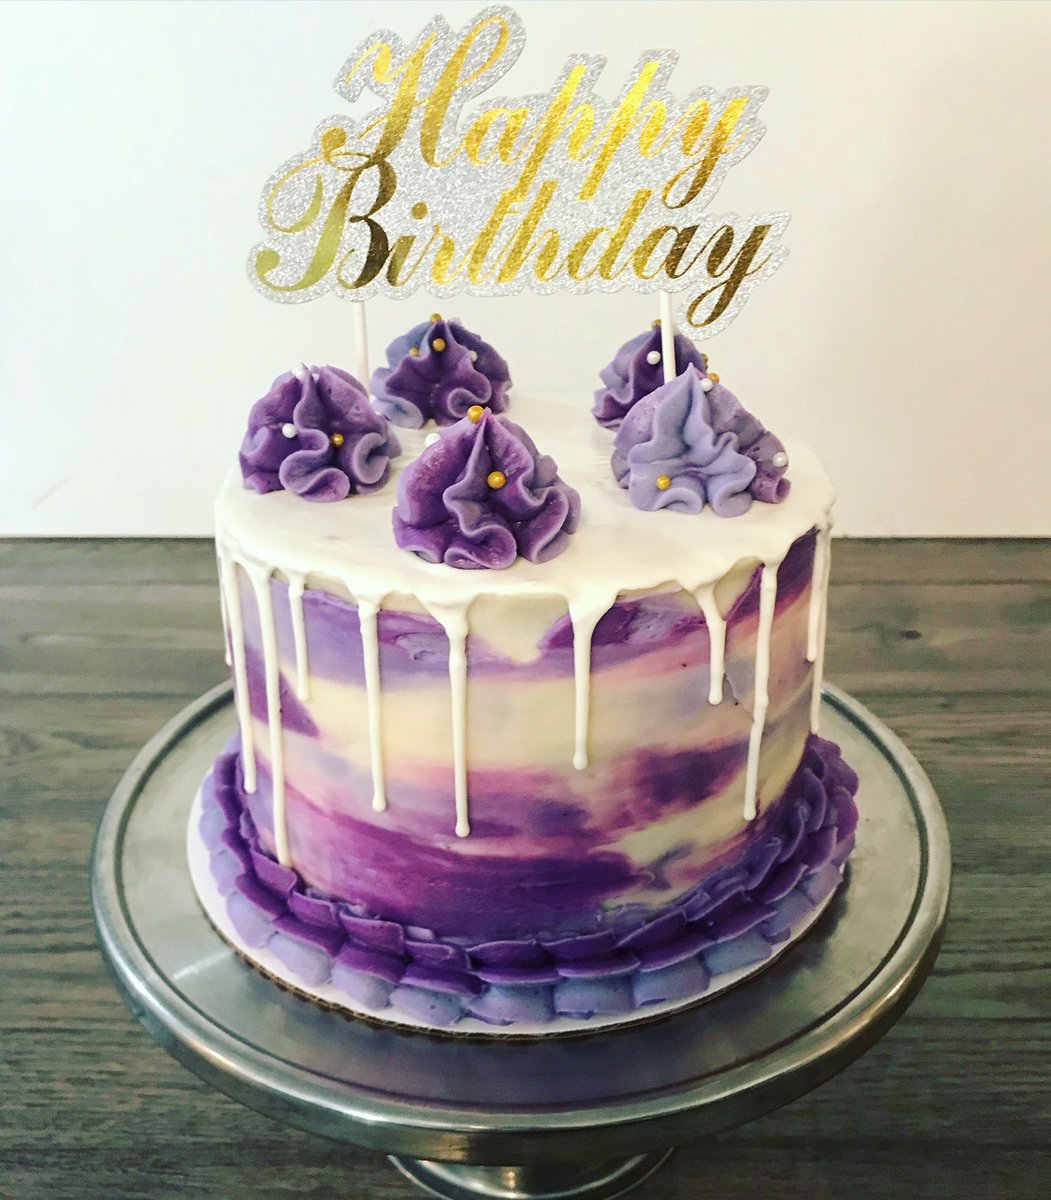 Beyoncé as birthday cake:  #Beyday          A thread       #HappybirthdayBeyoncé!!